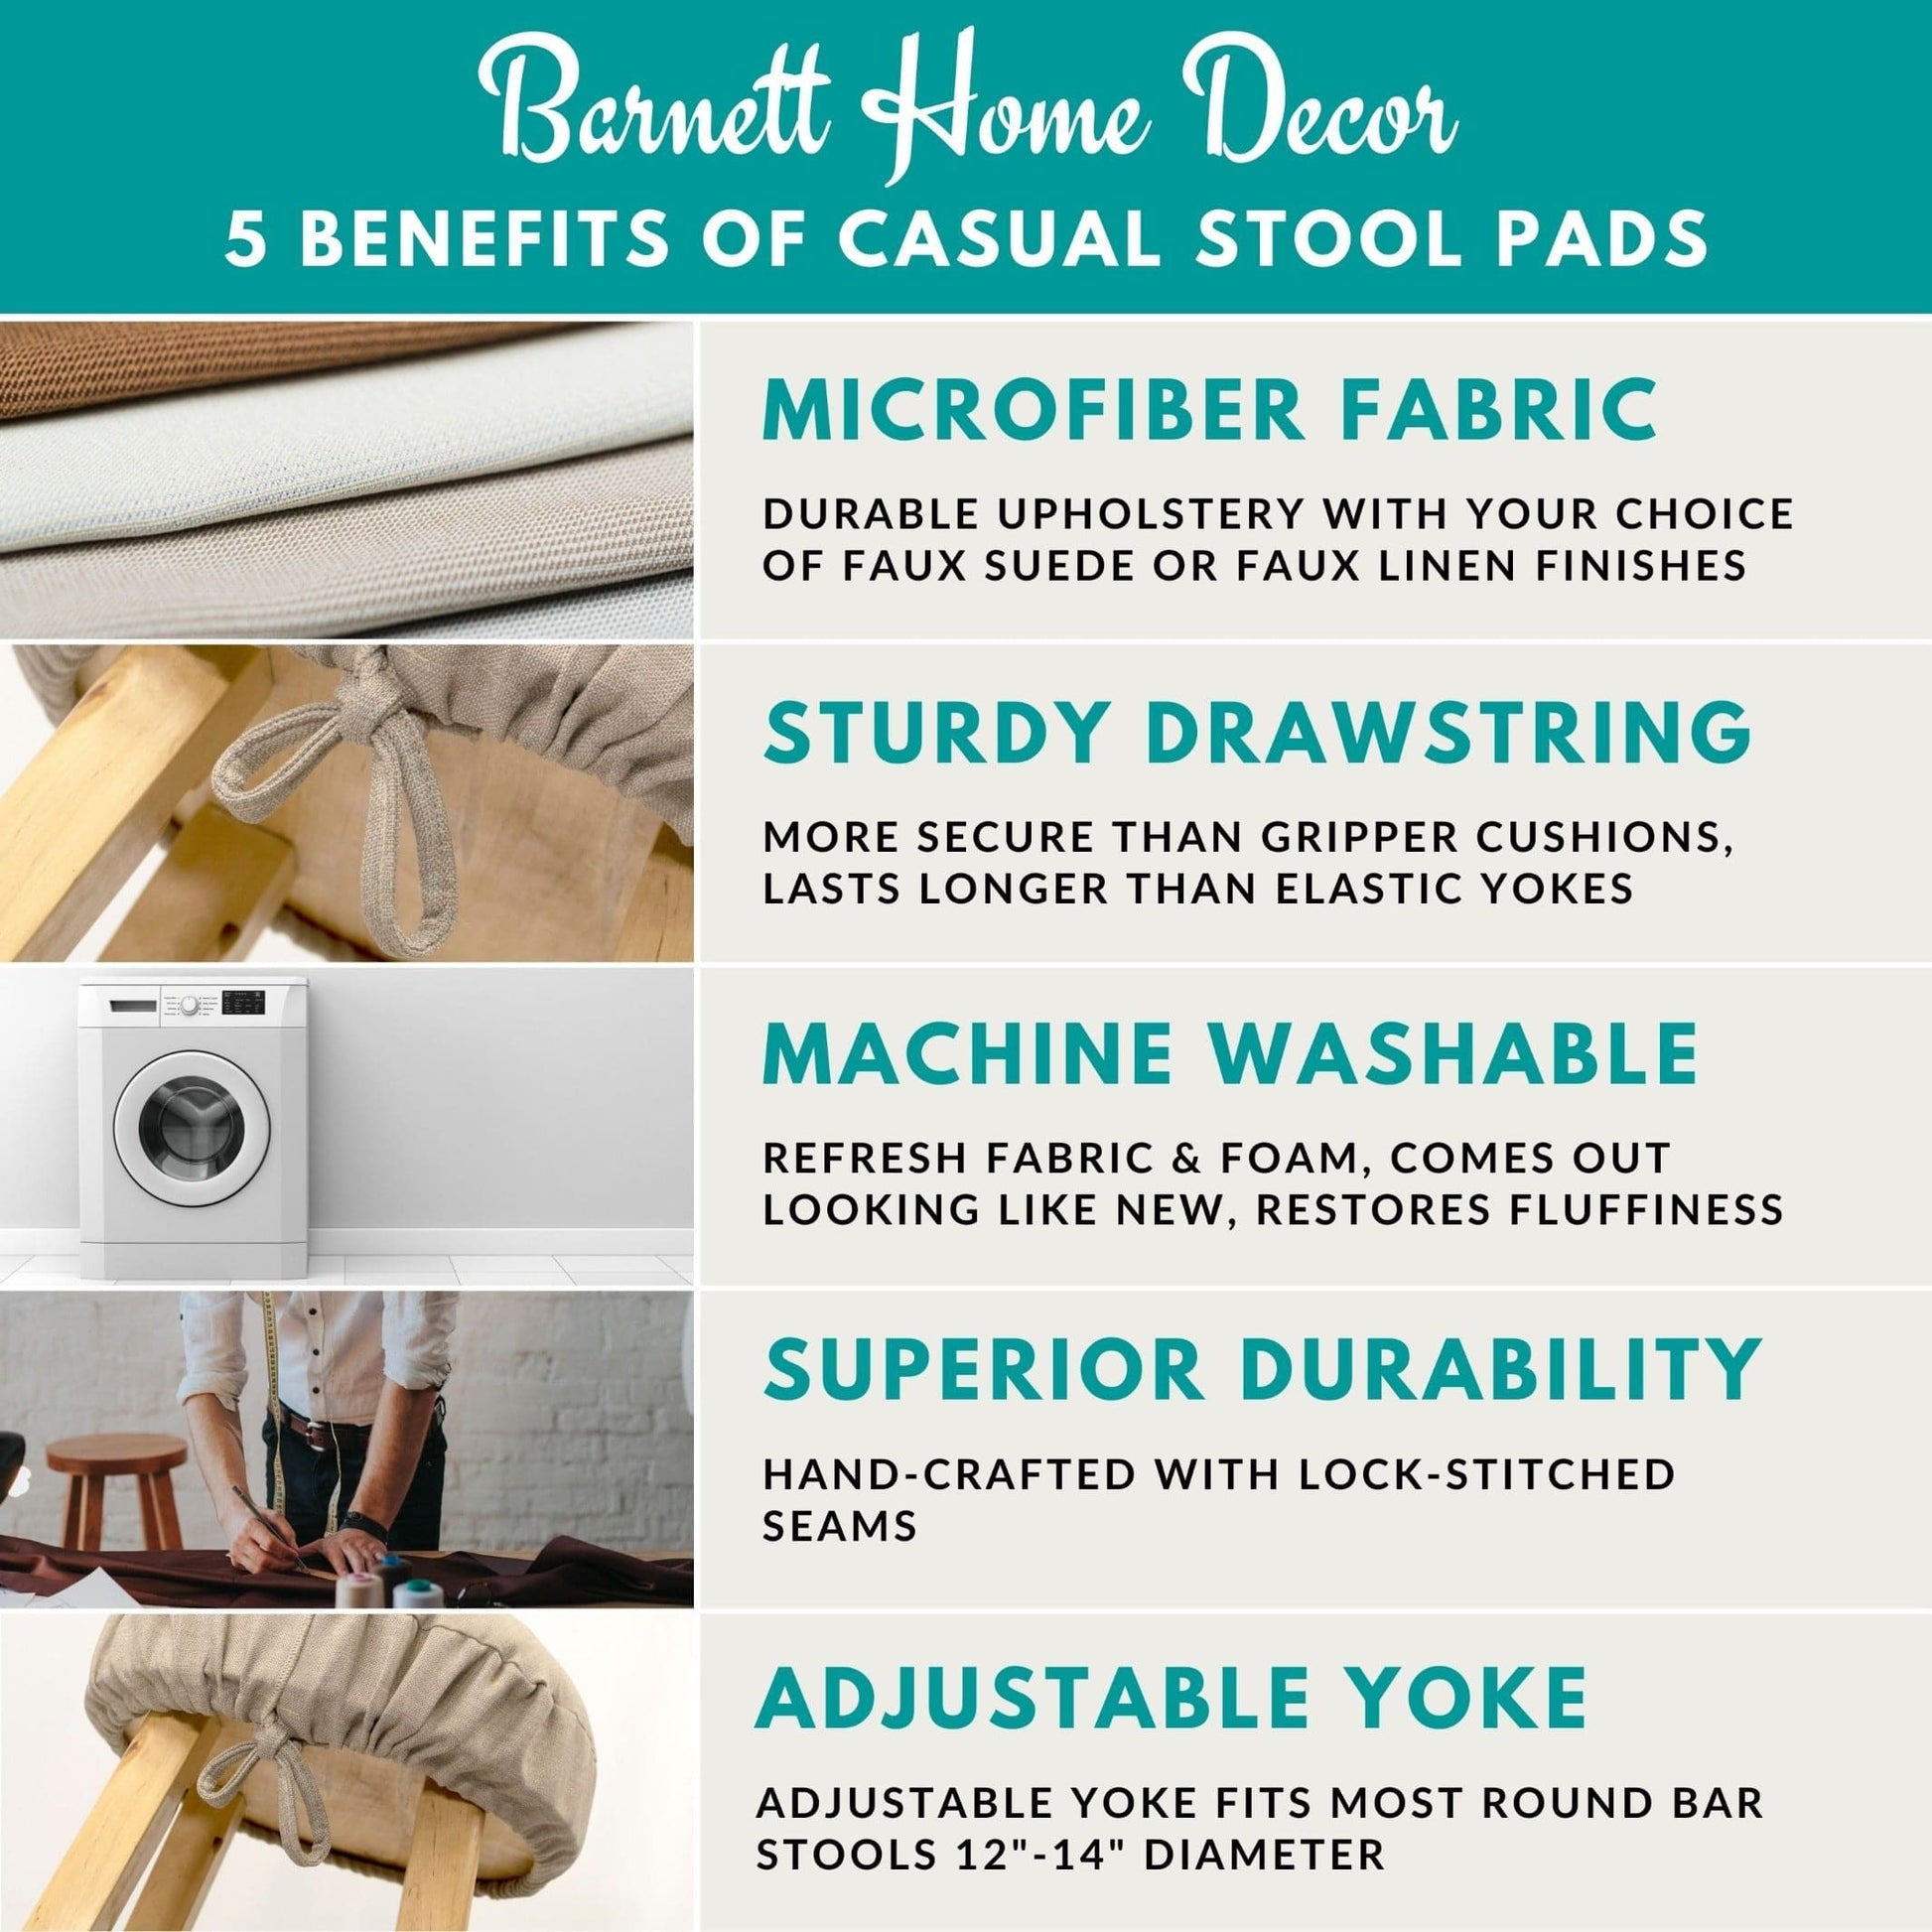 Barnett Home Decor Benefits of Casual Stool Pads: Microfiber Fabric, Machine Washable, Superior Durability, Adjustable Yoke